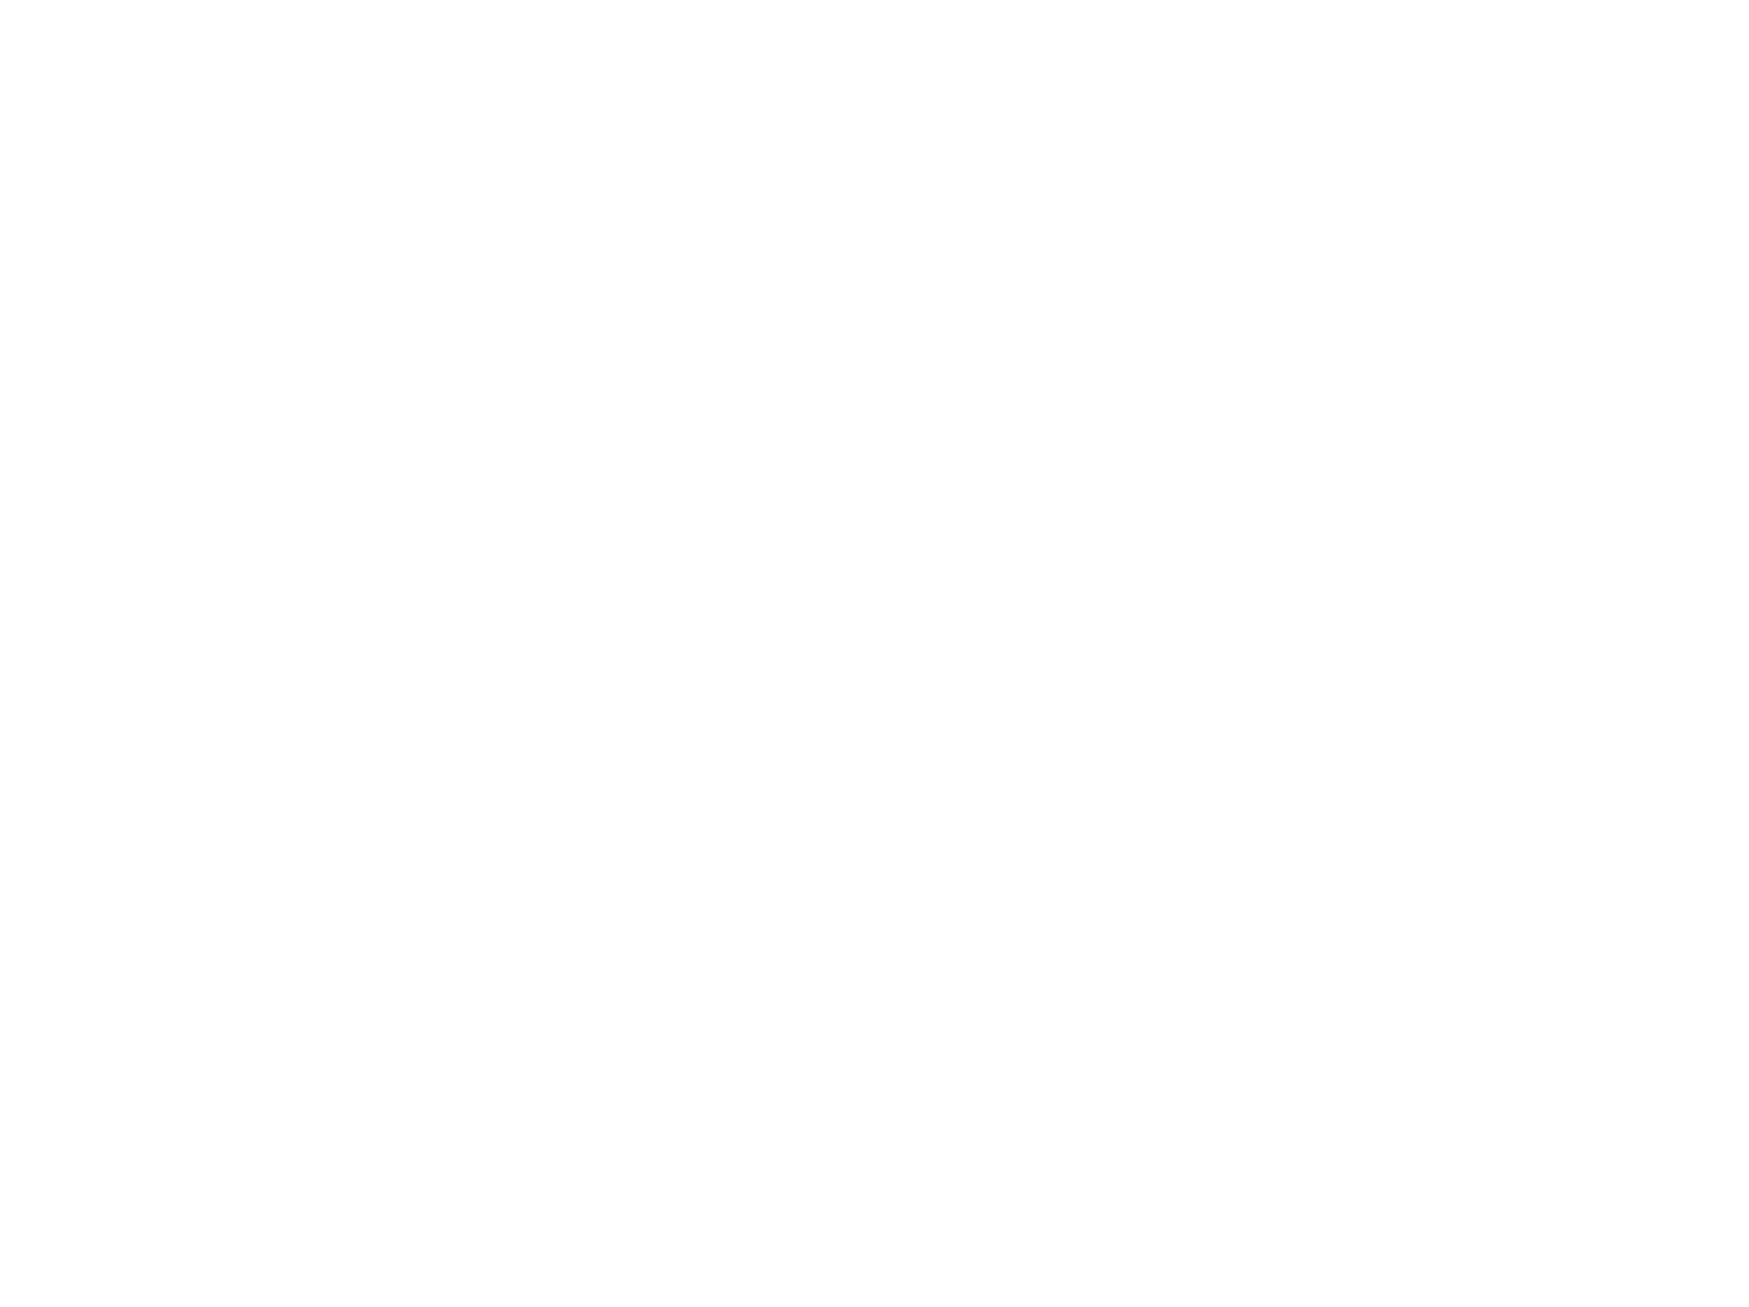 Michelangelo's Sistine Chapel: Portland City Exhibit